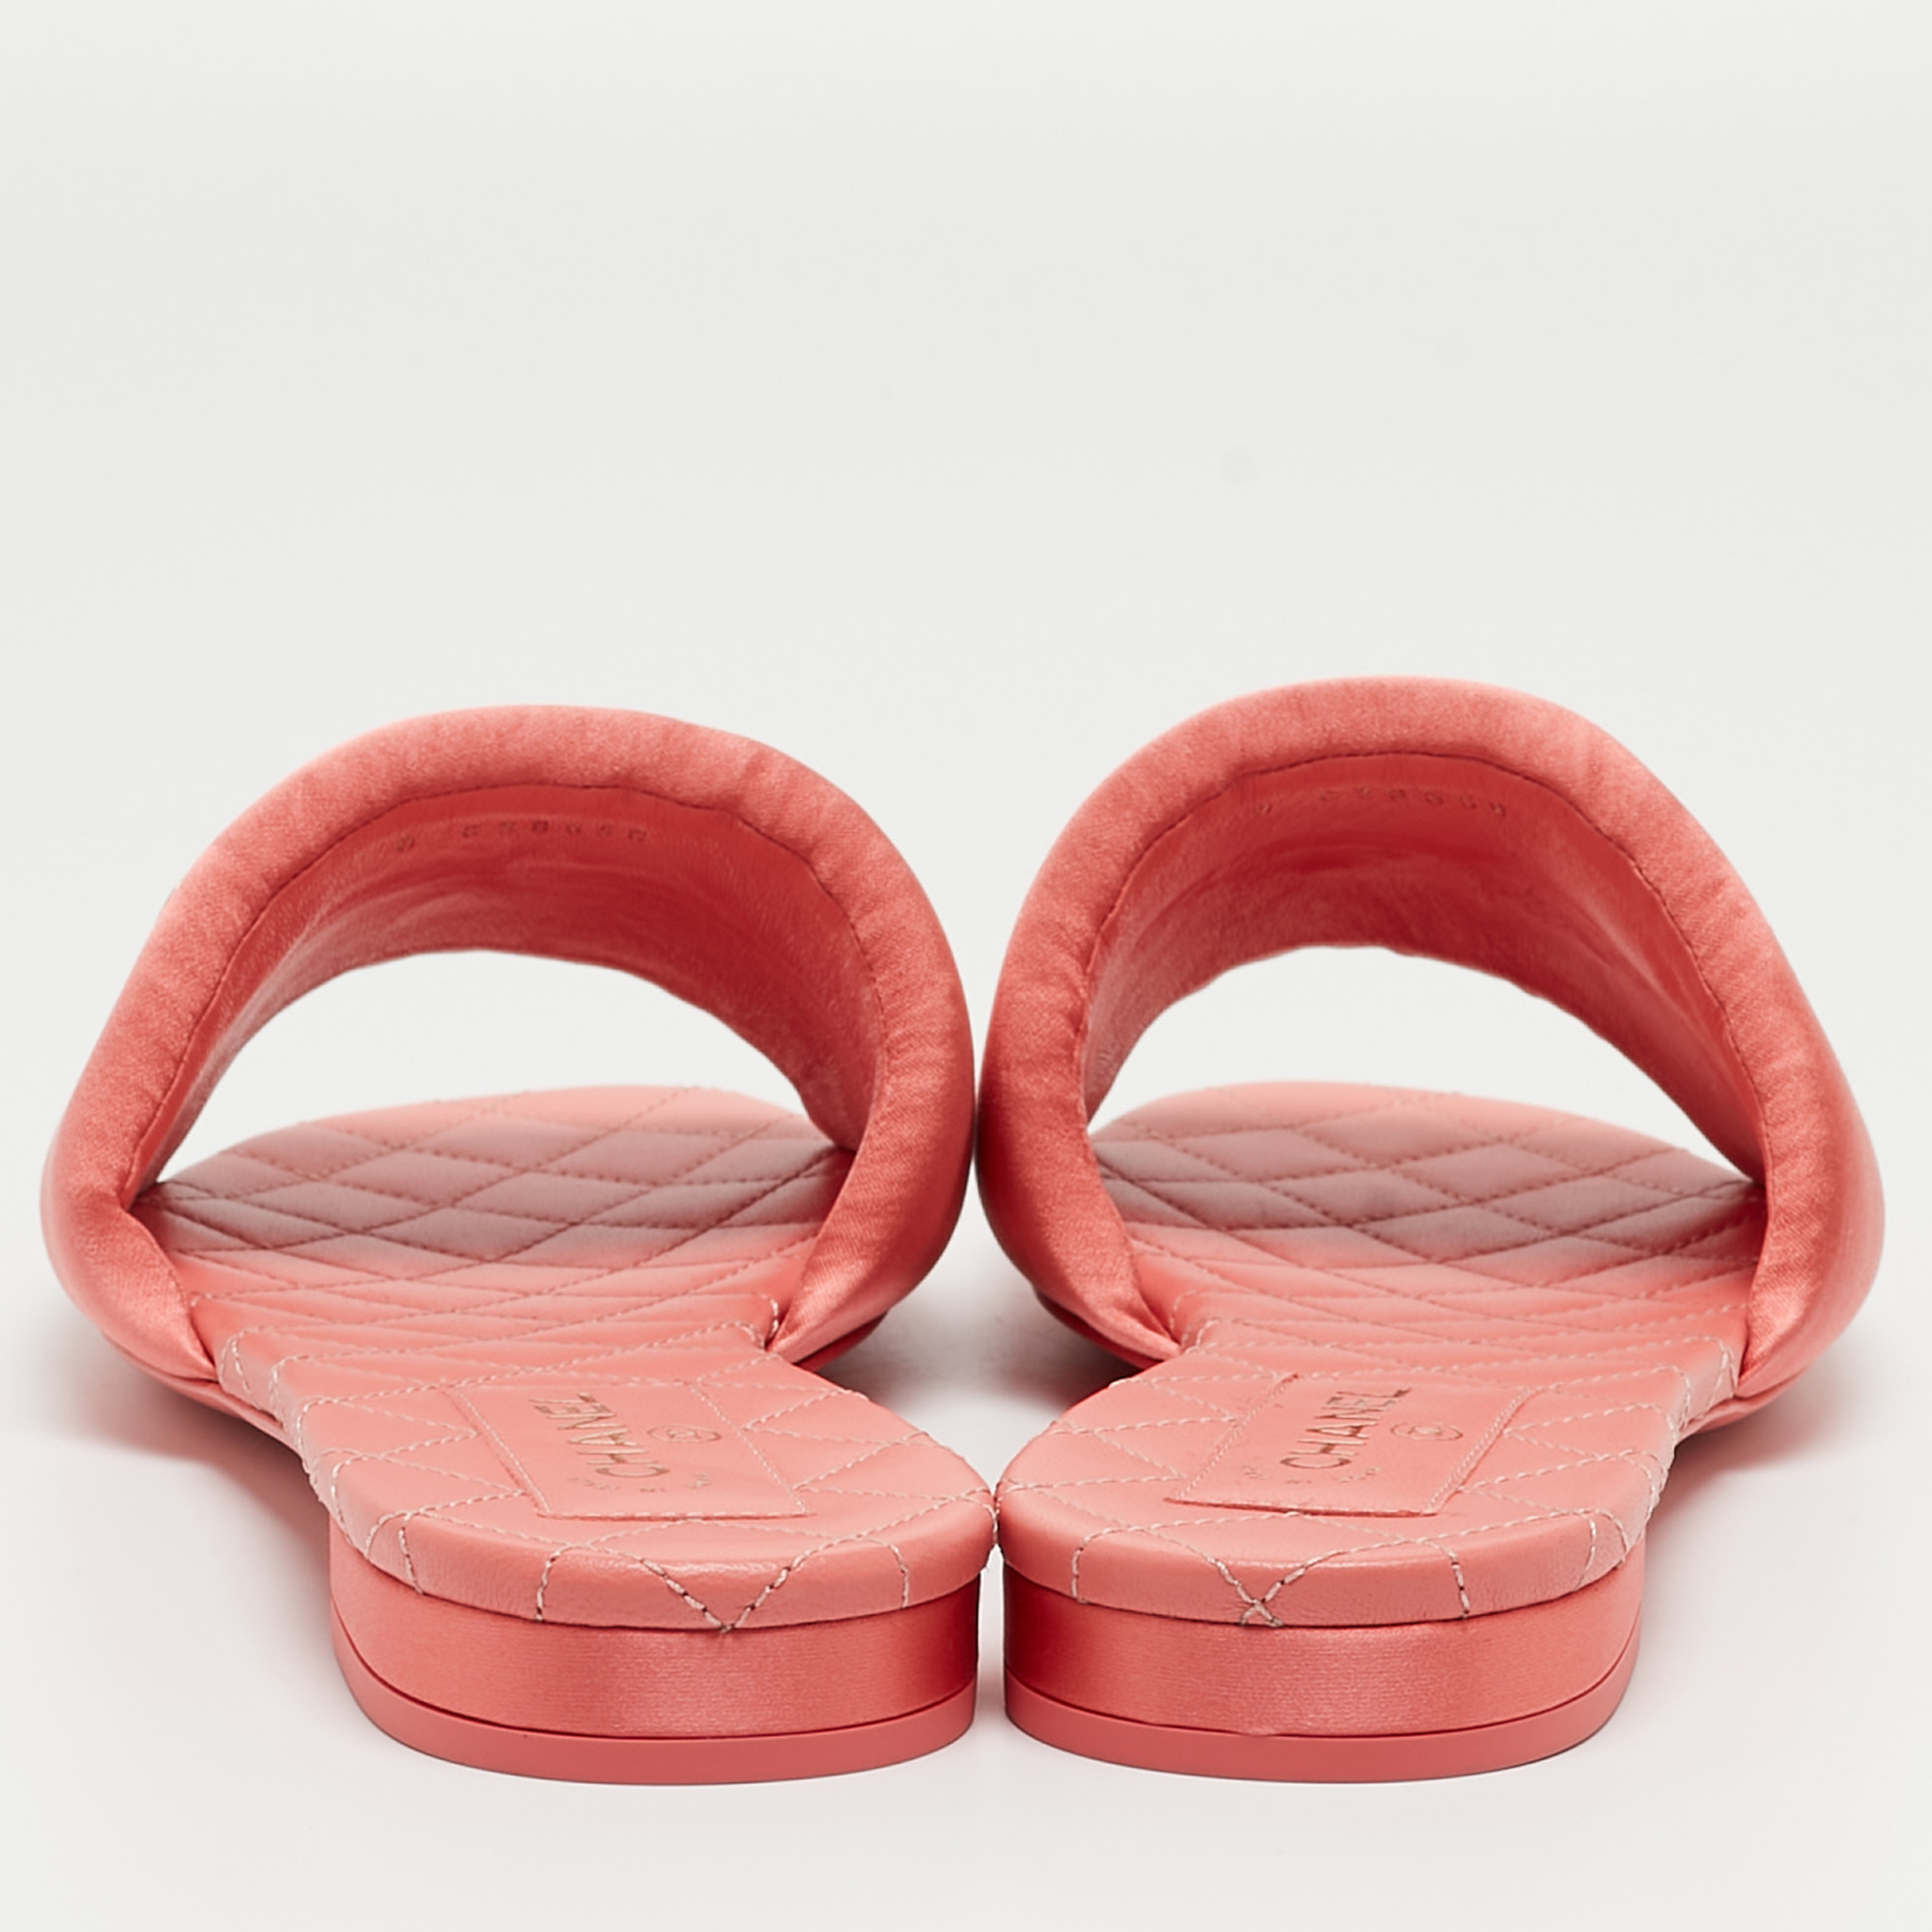 Chanel Pink Satin CC Flat Slides Size 40